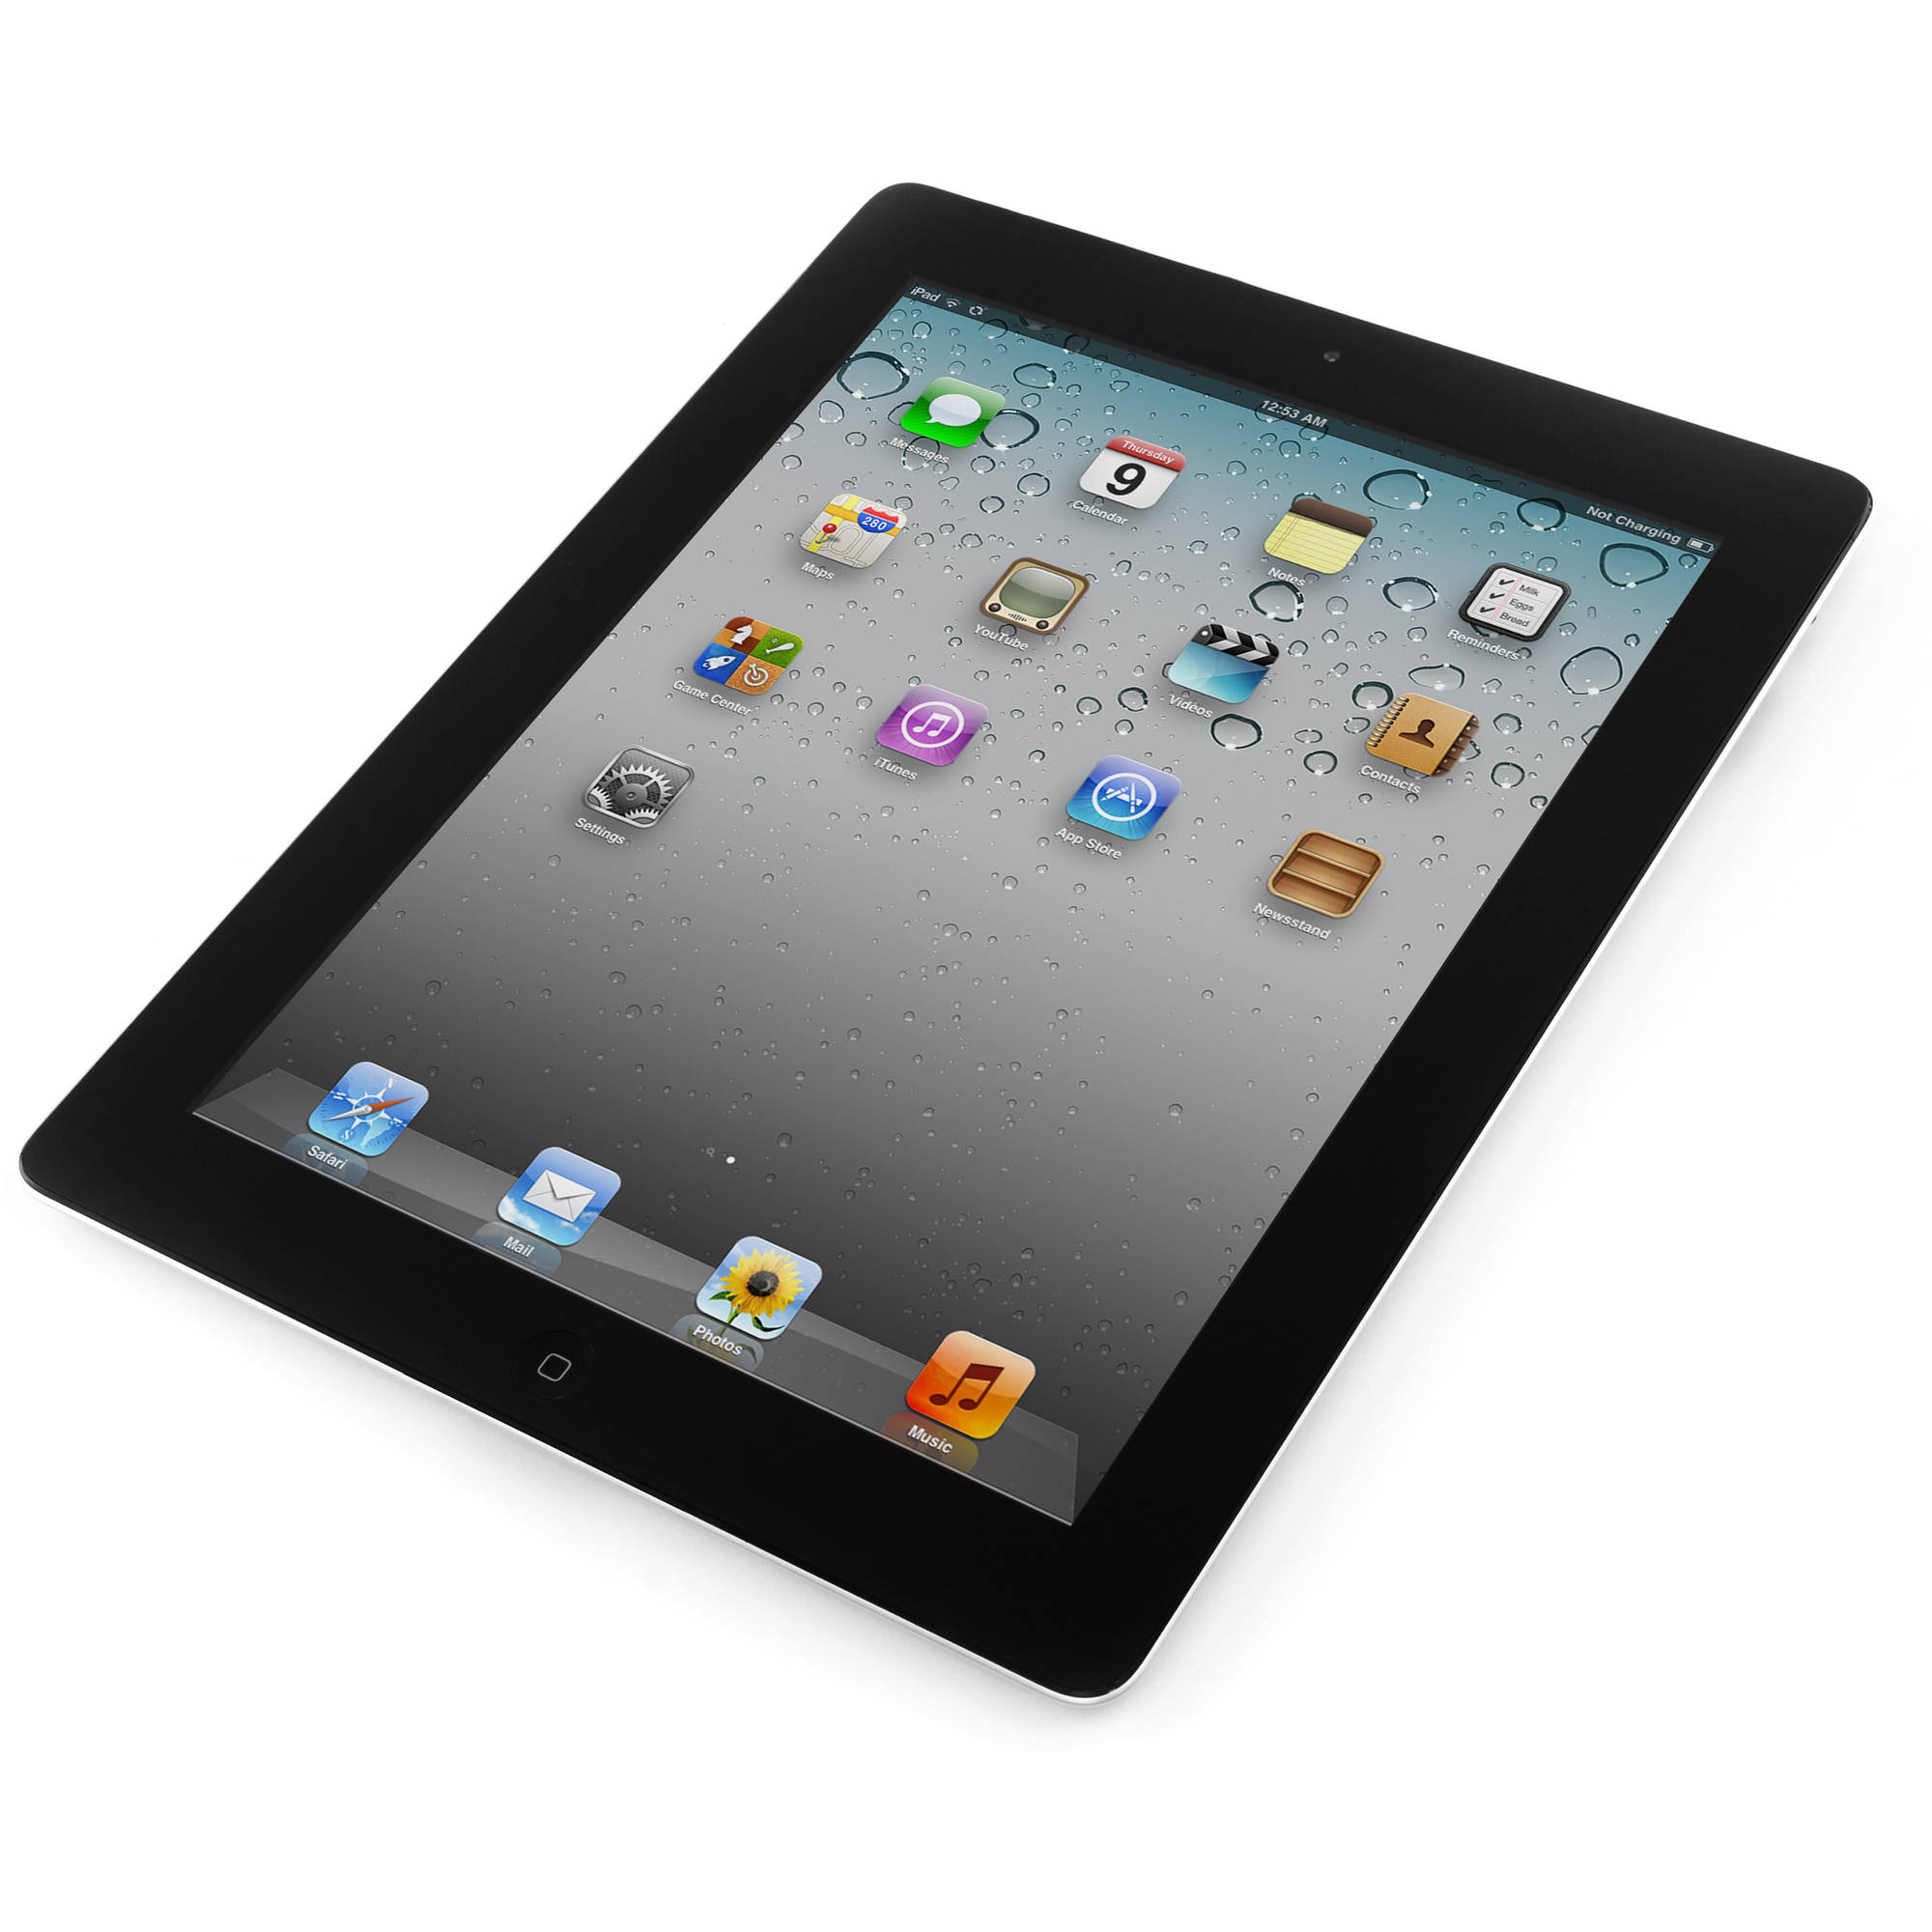 Restored Apple iPad 4 9.7-inch 16GB Wi-Fi, Black (Refurbished) - image 1 of 3